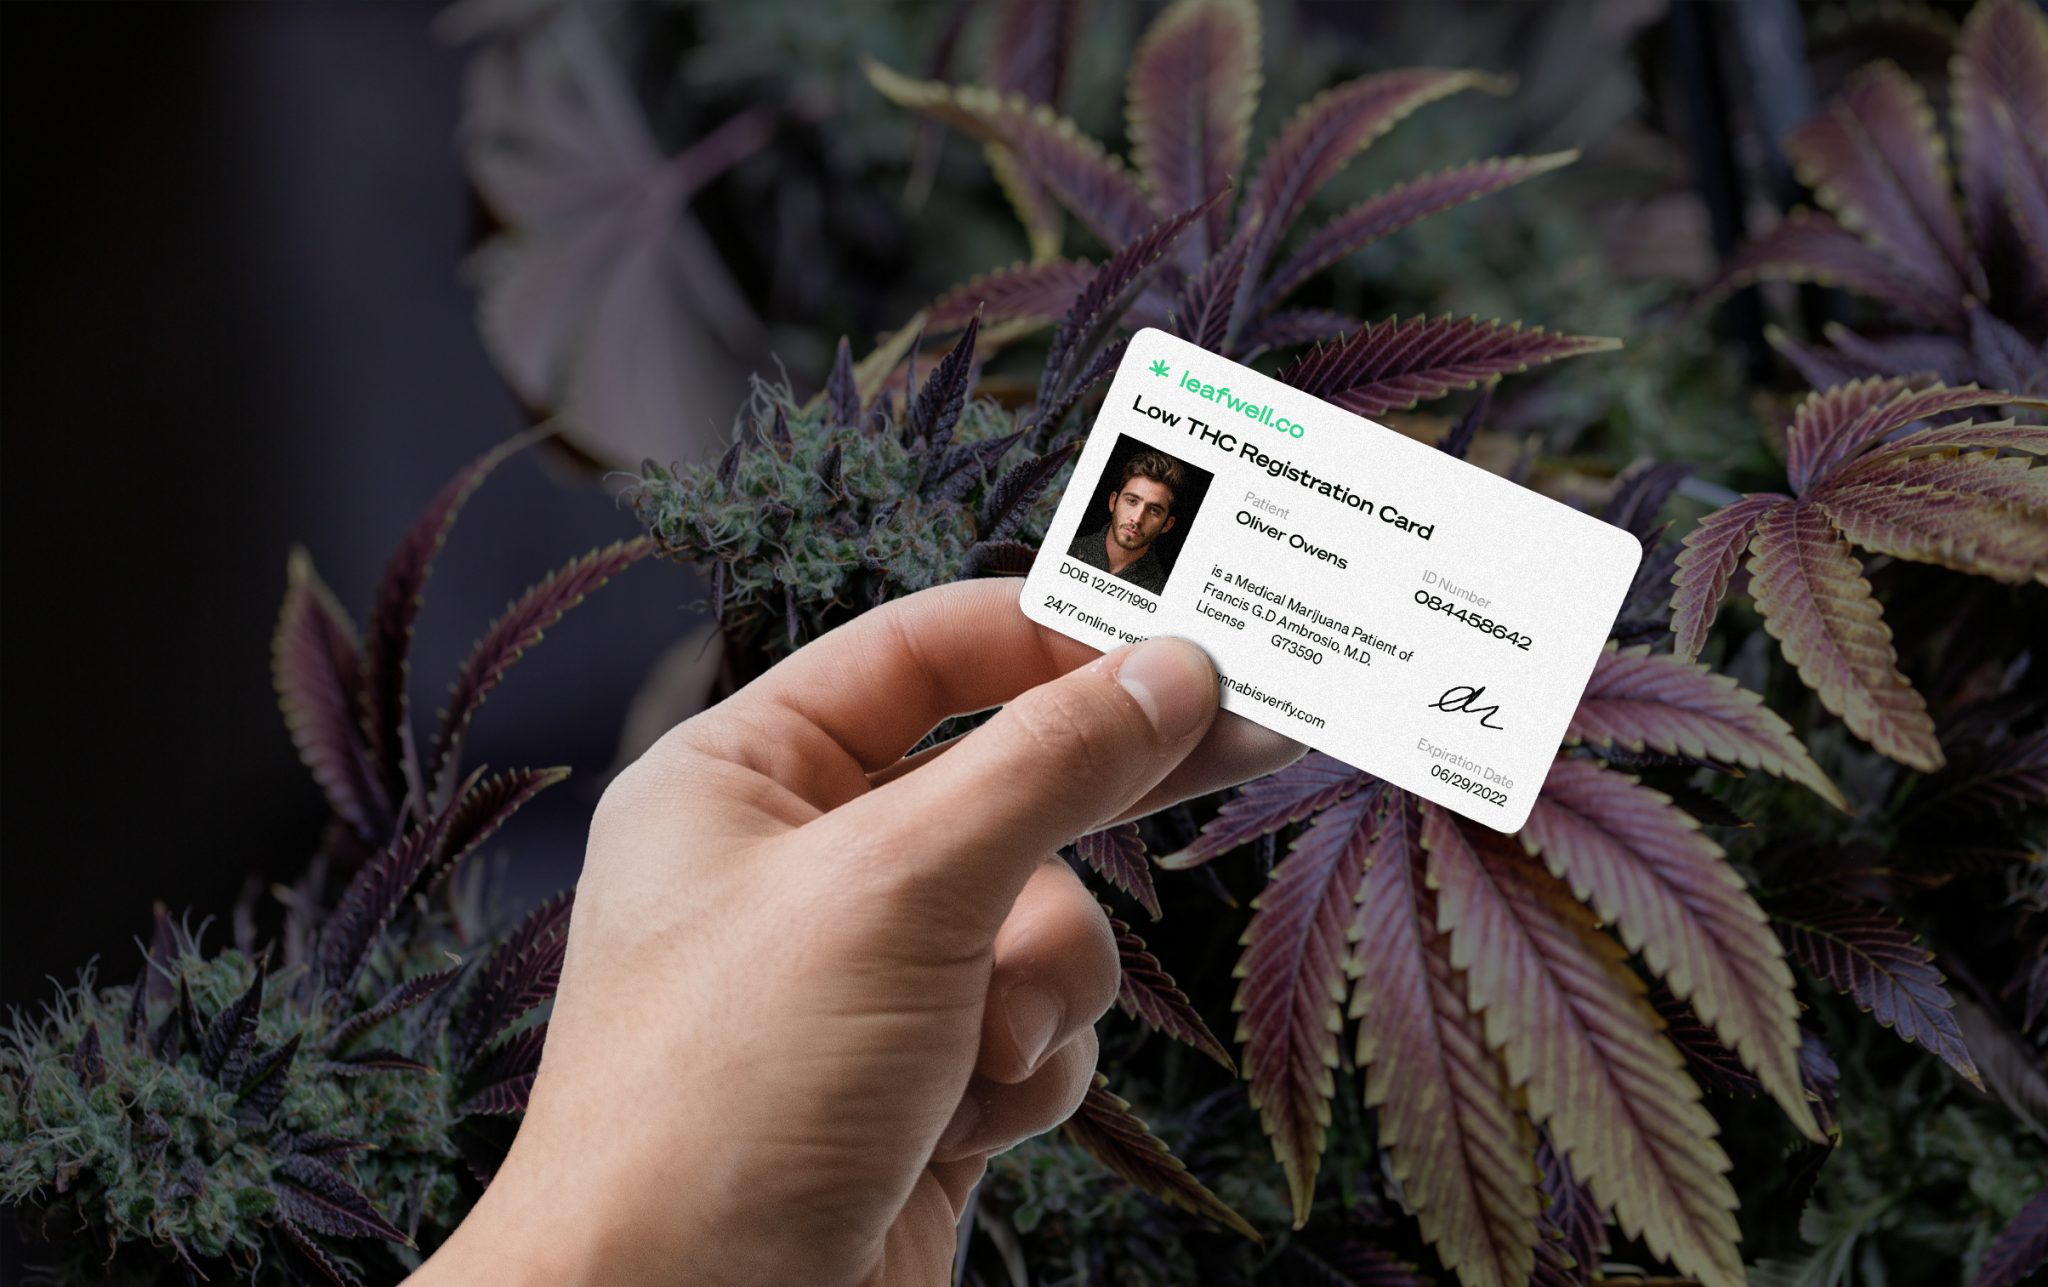 low thc cannabis card